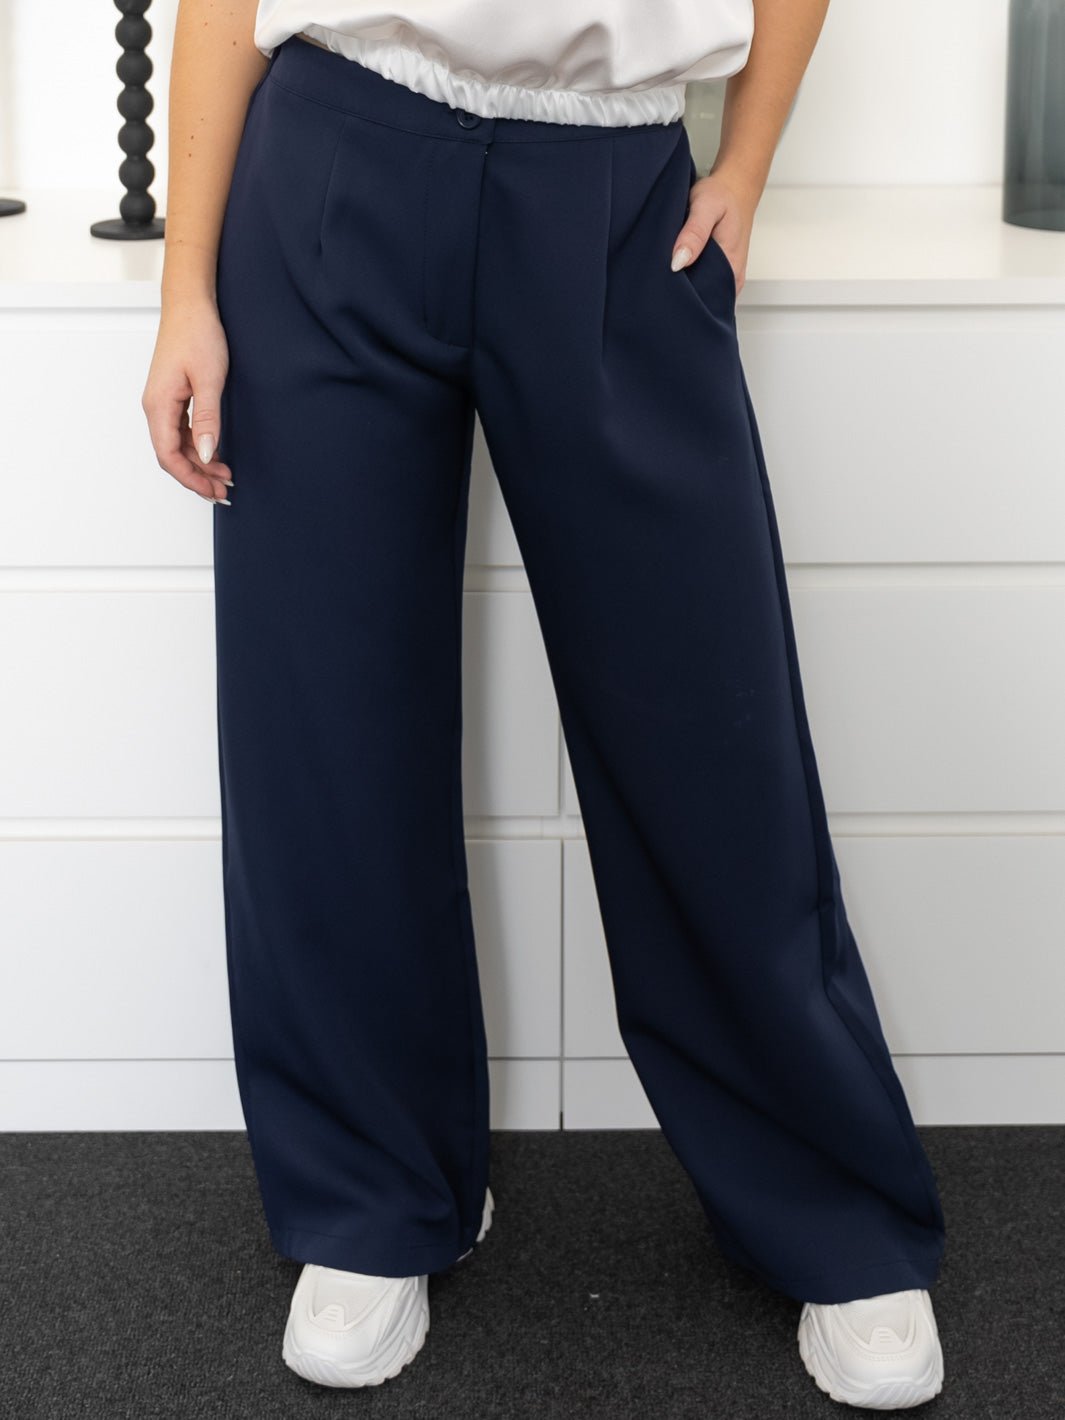 All Week Canja wide pants navy blue - Online-Mode